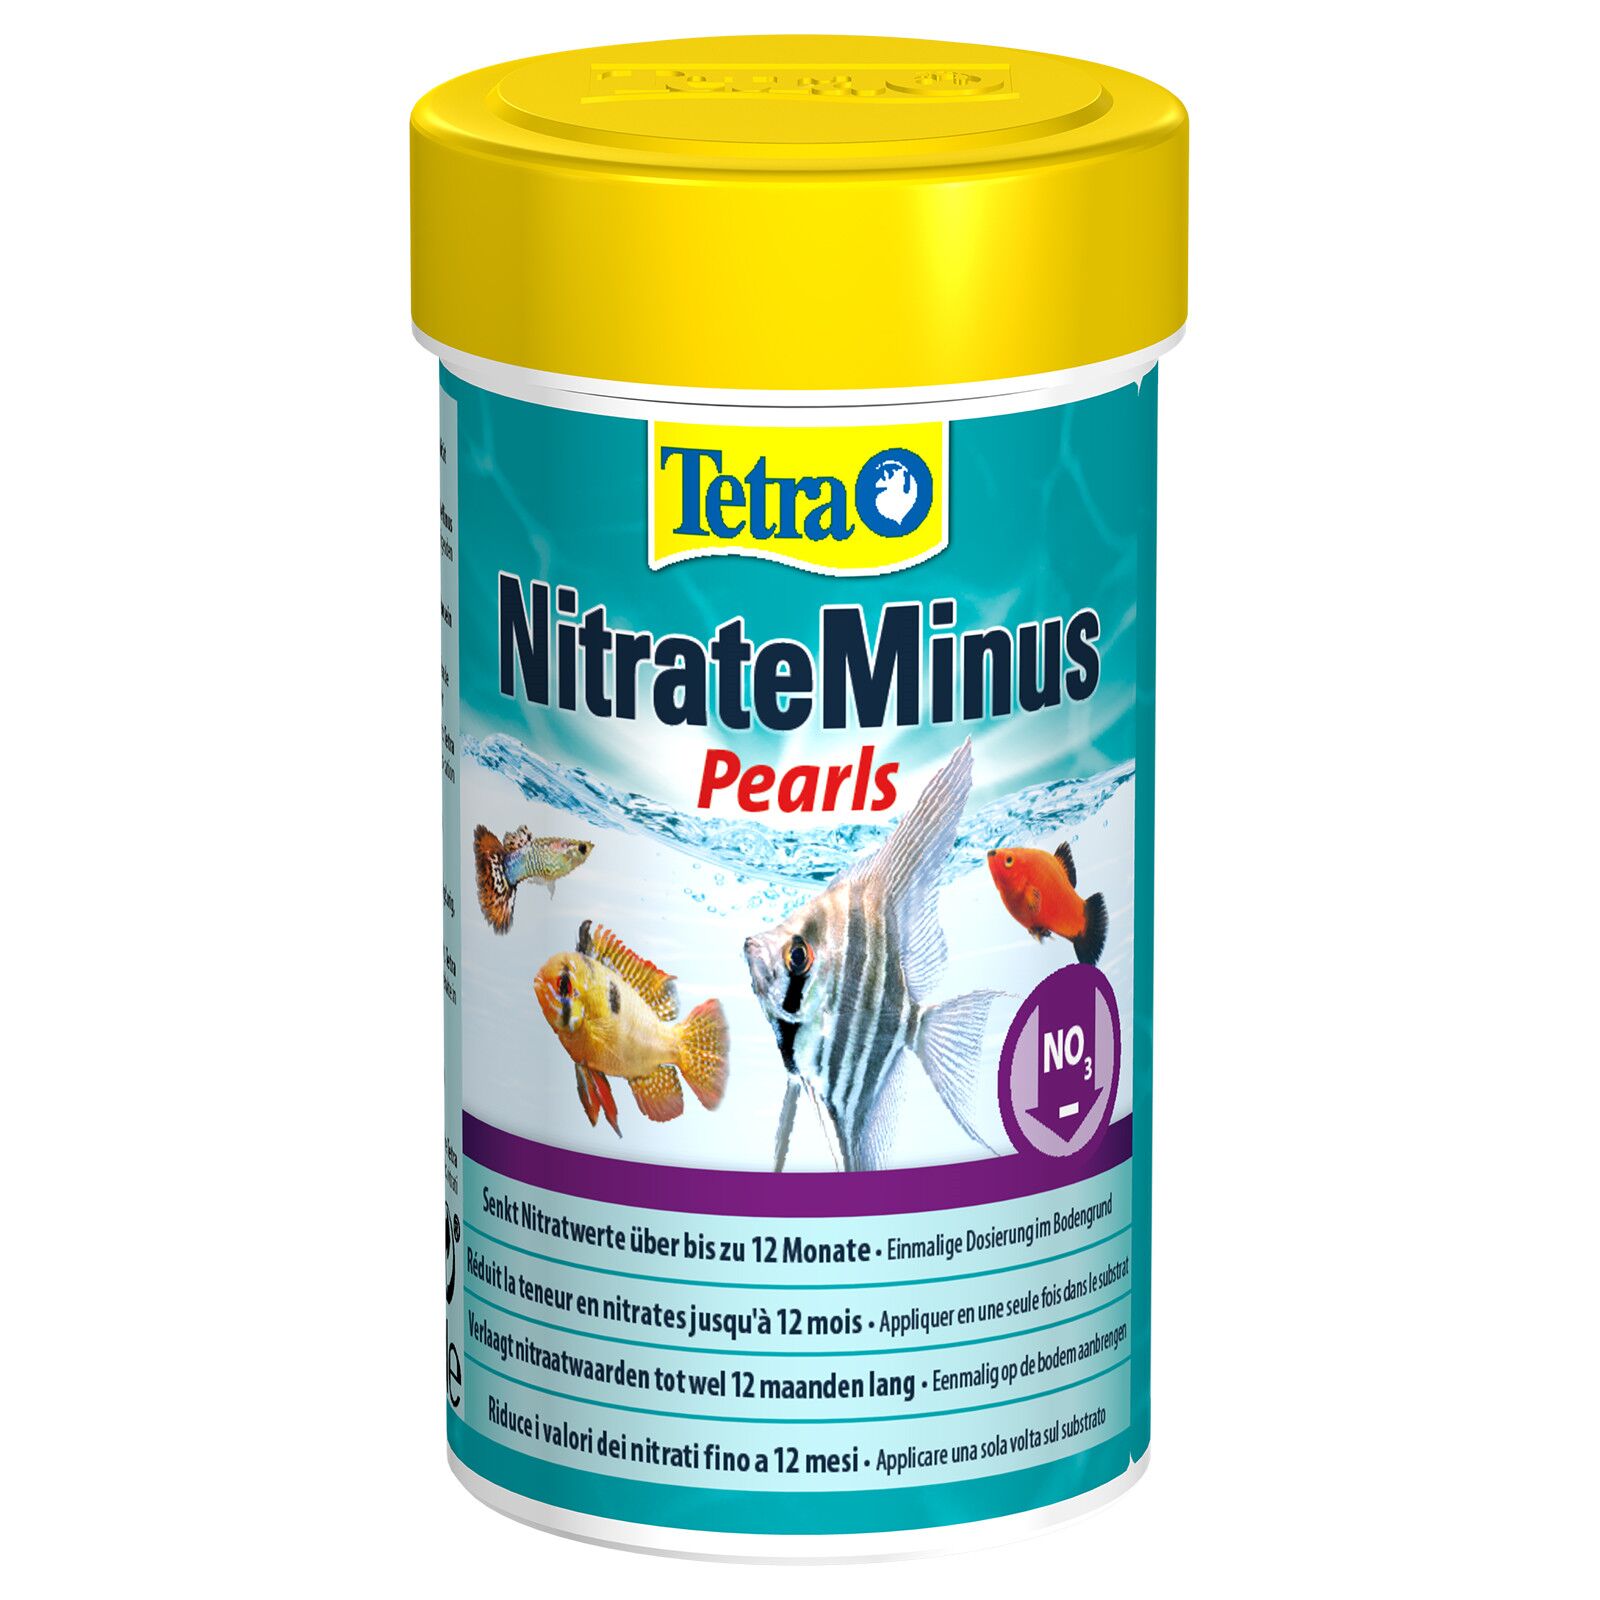 Tetra - NitrateMinus Pearls